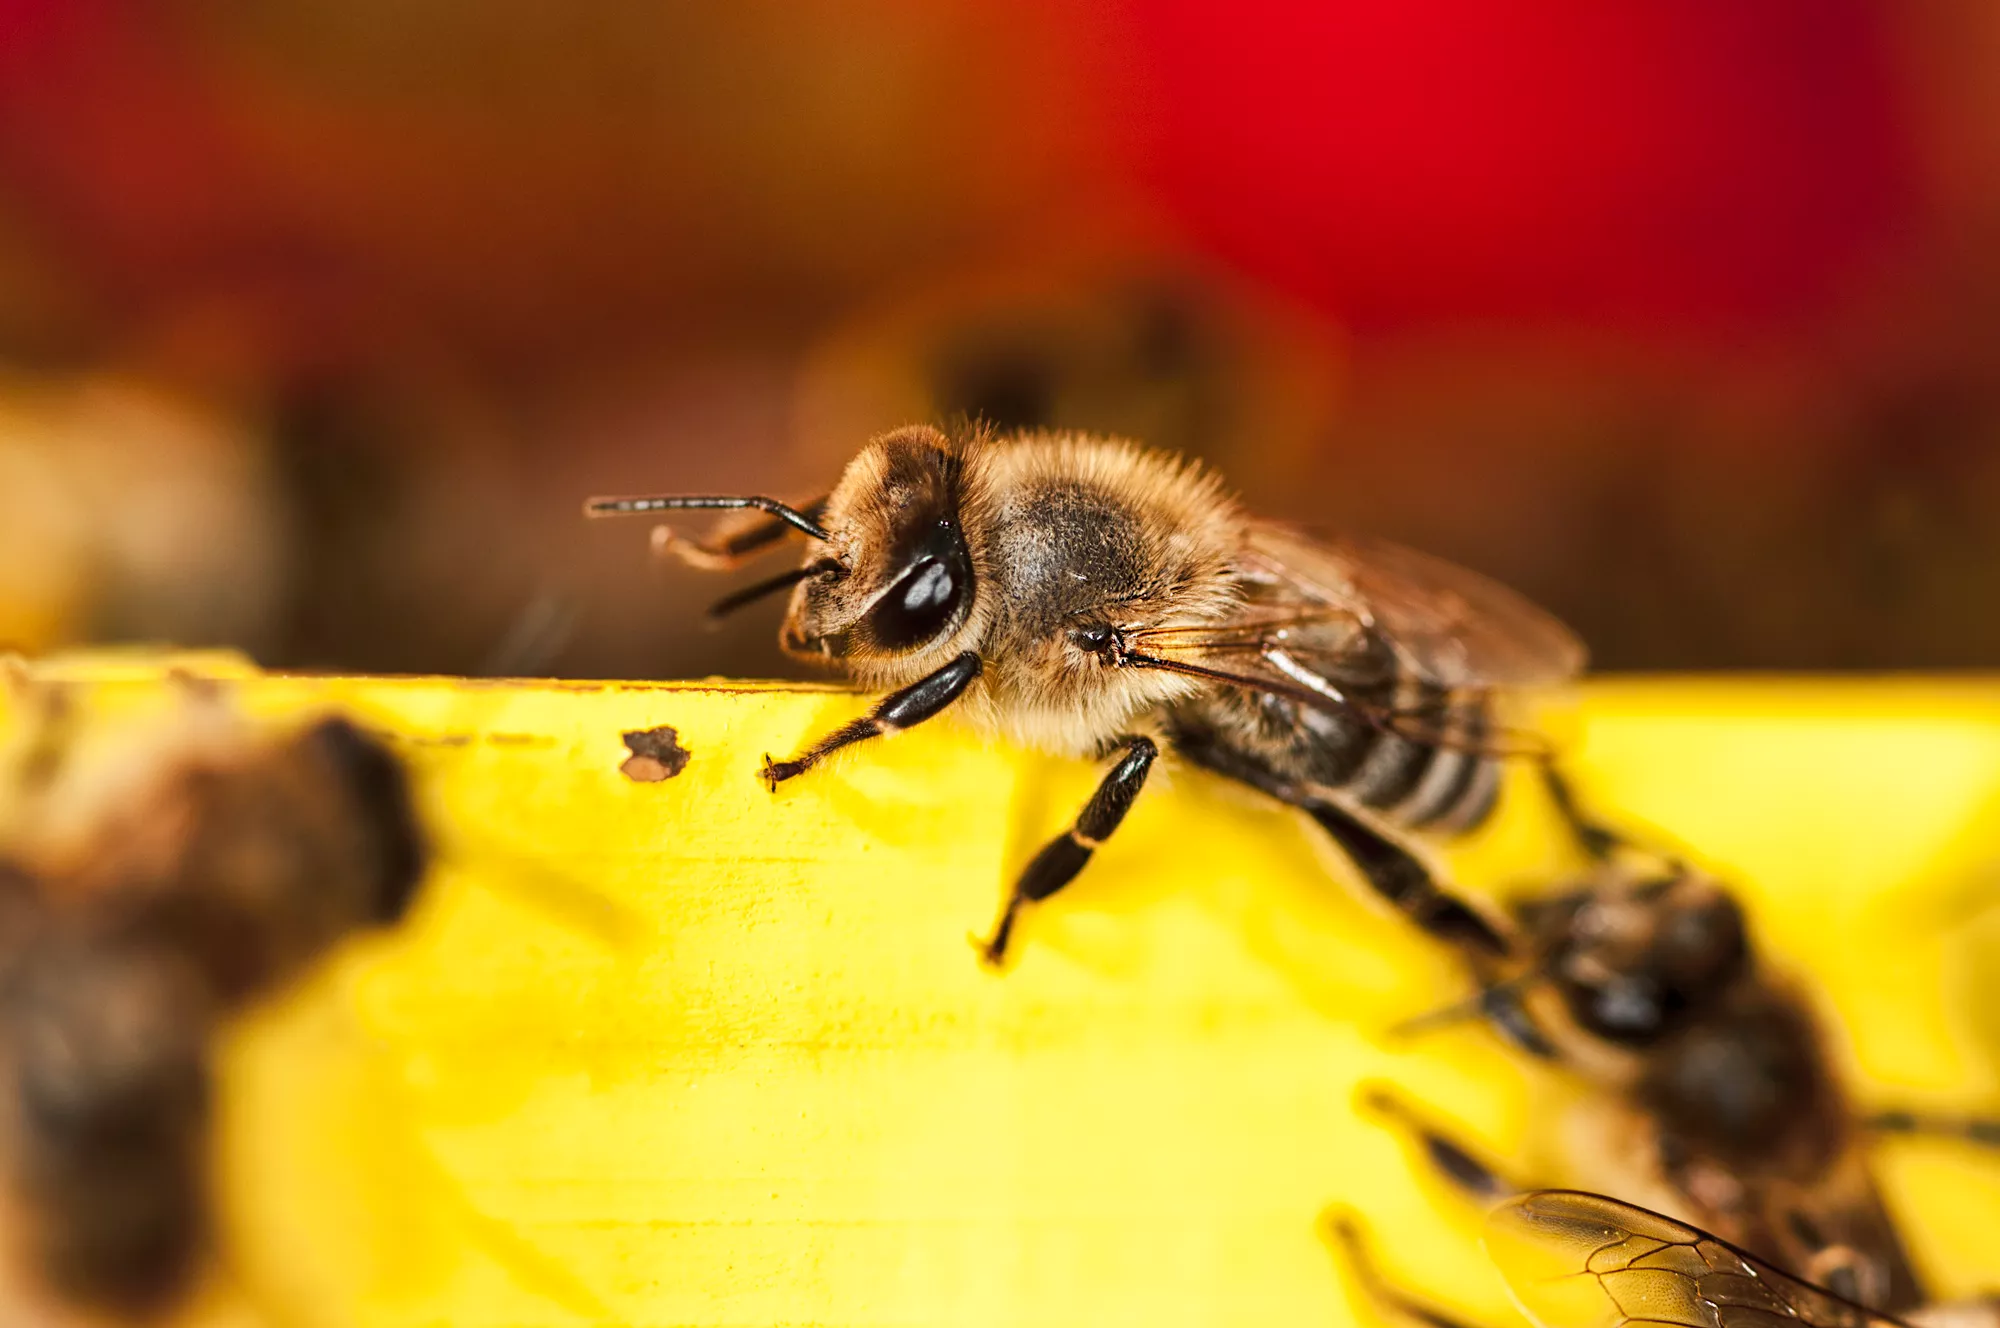 Cómo saber si tu picadura de abeja está infectada, según un médico